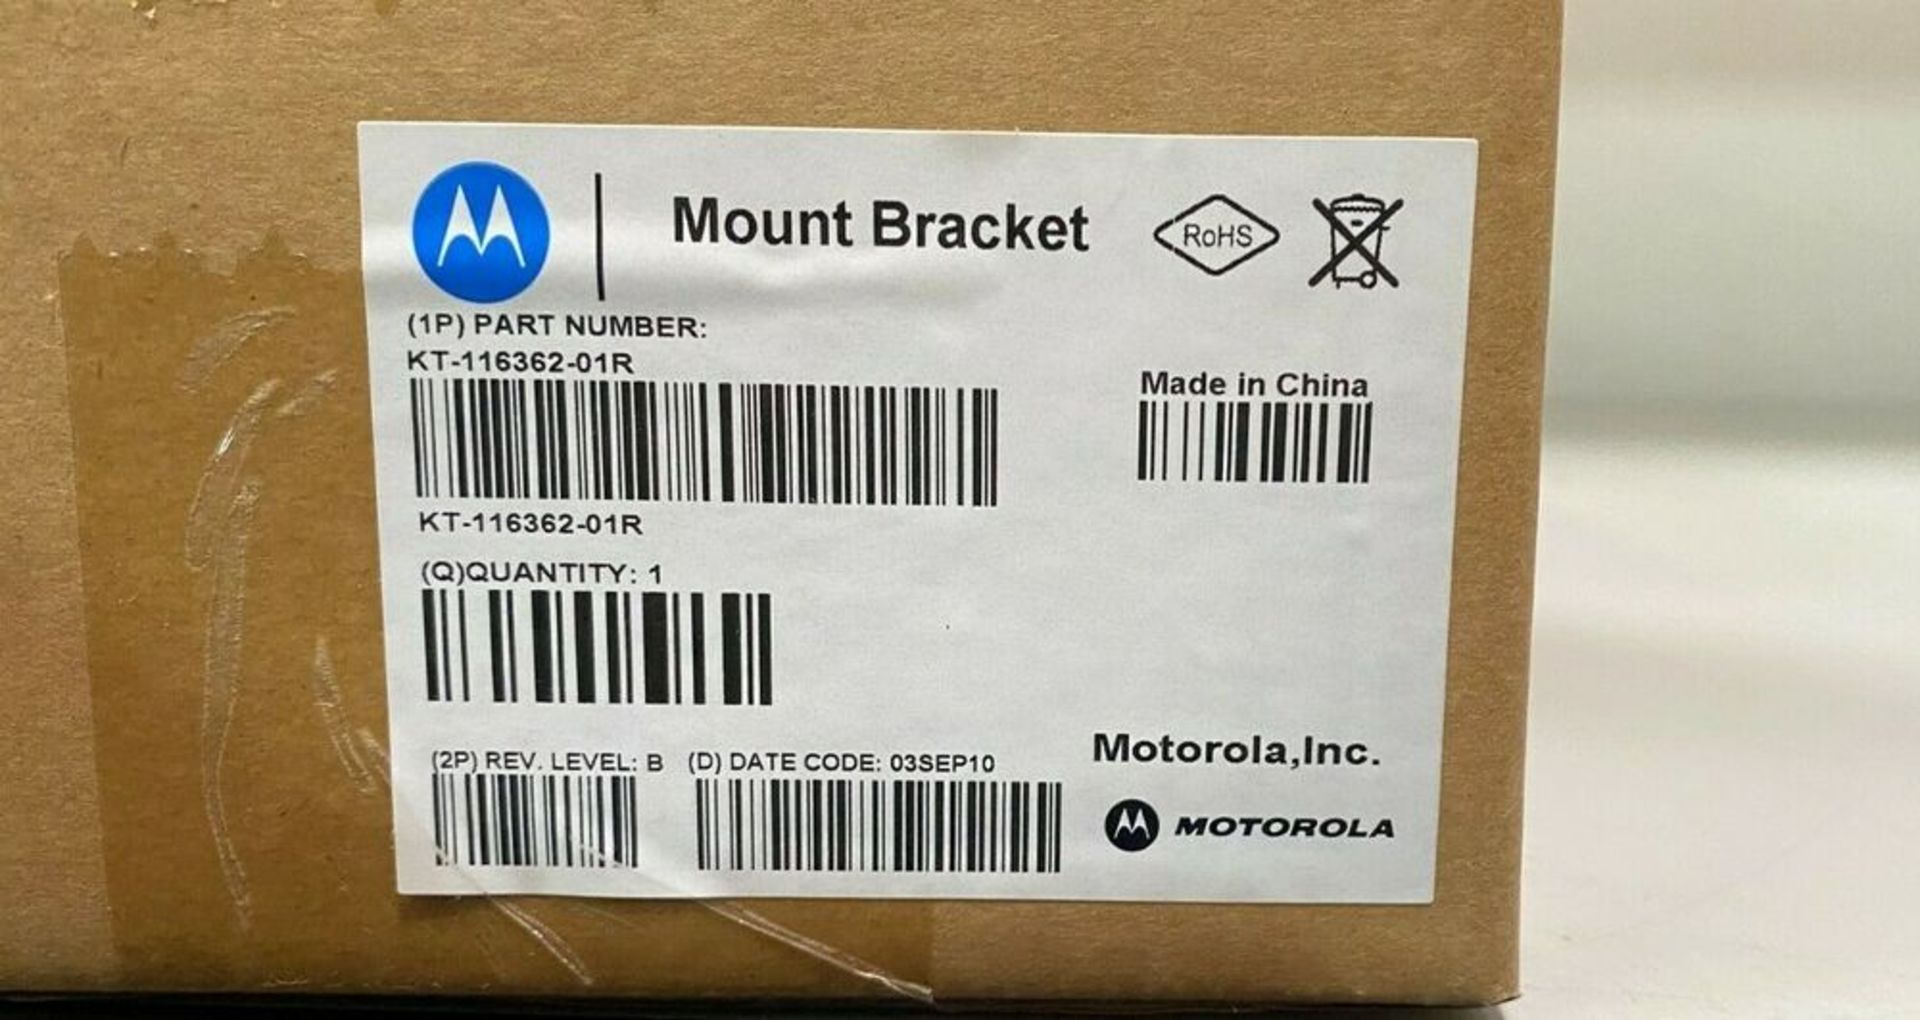 Motorola KT-116362-01R Mount Bracket - Wall Mount Kit for Battery Charger Cradle - Image 7 of 8